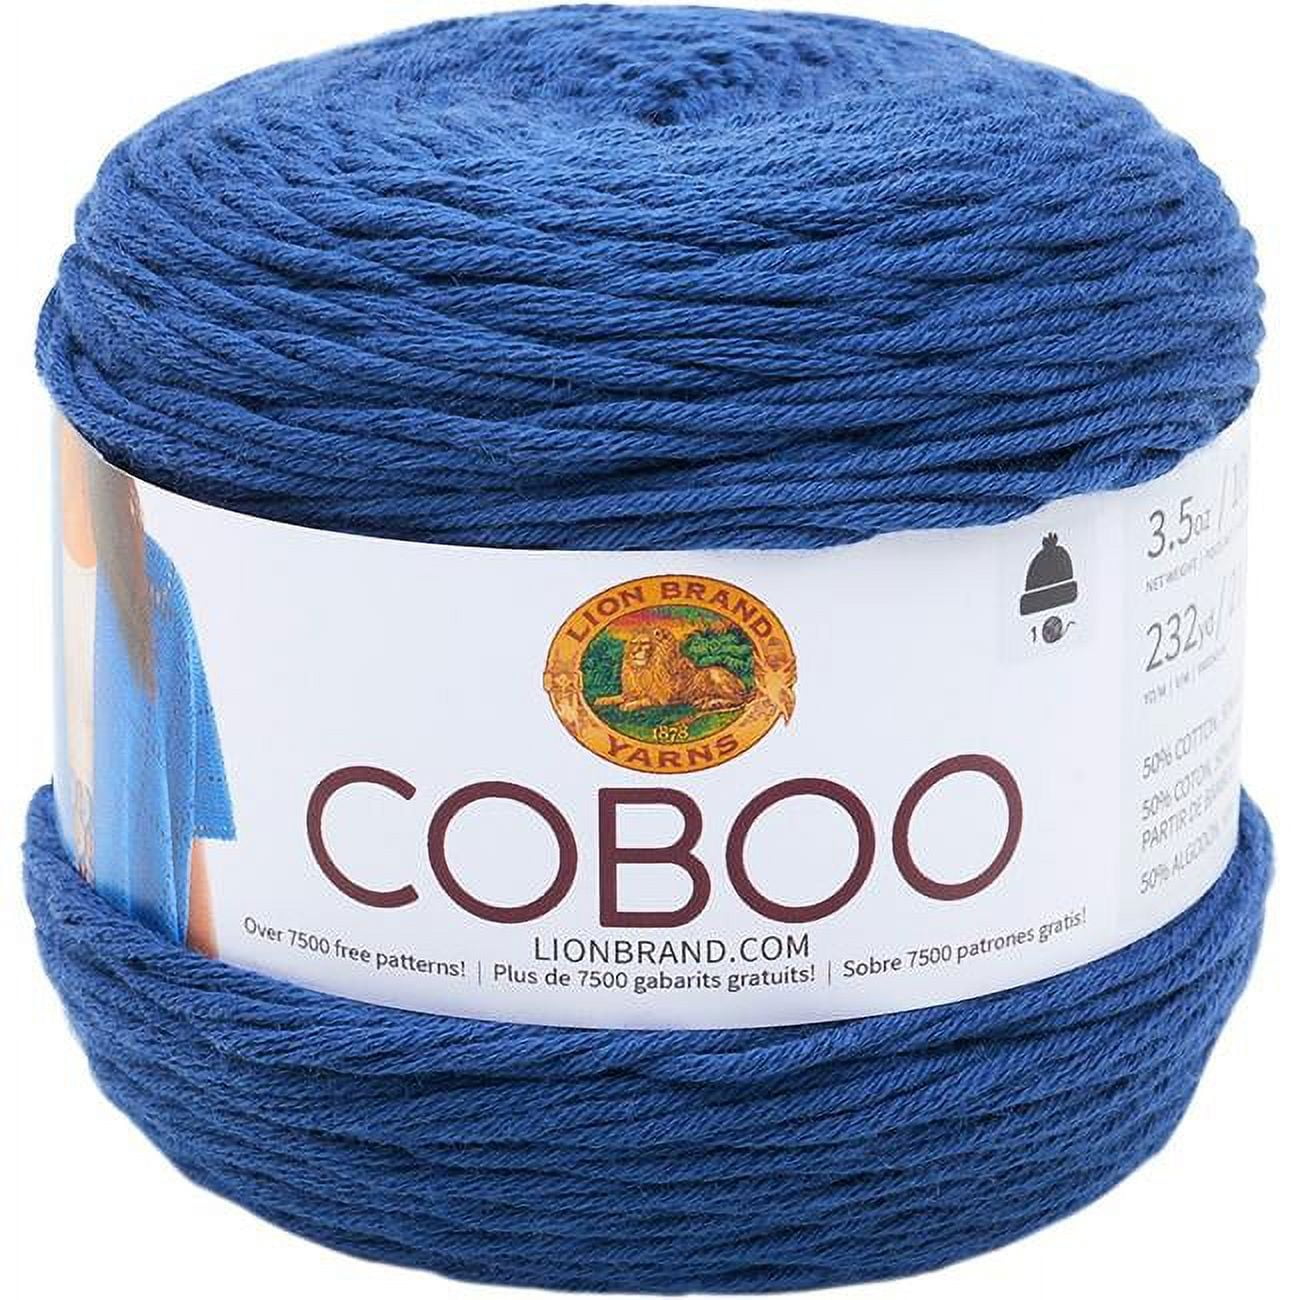 Steel Blue Coboo Yarn 